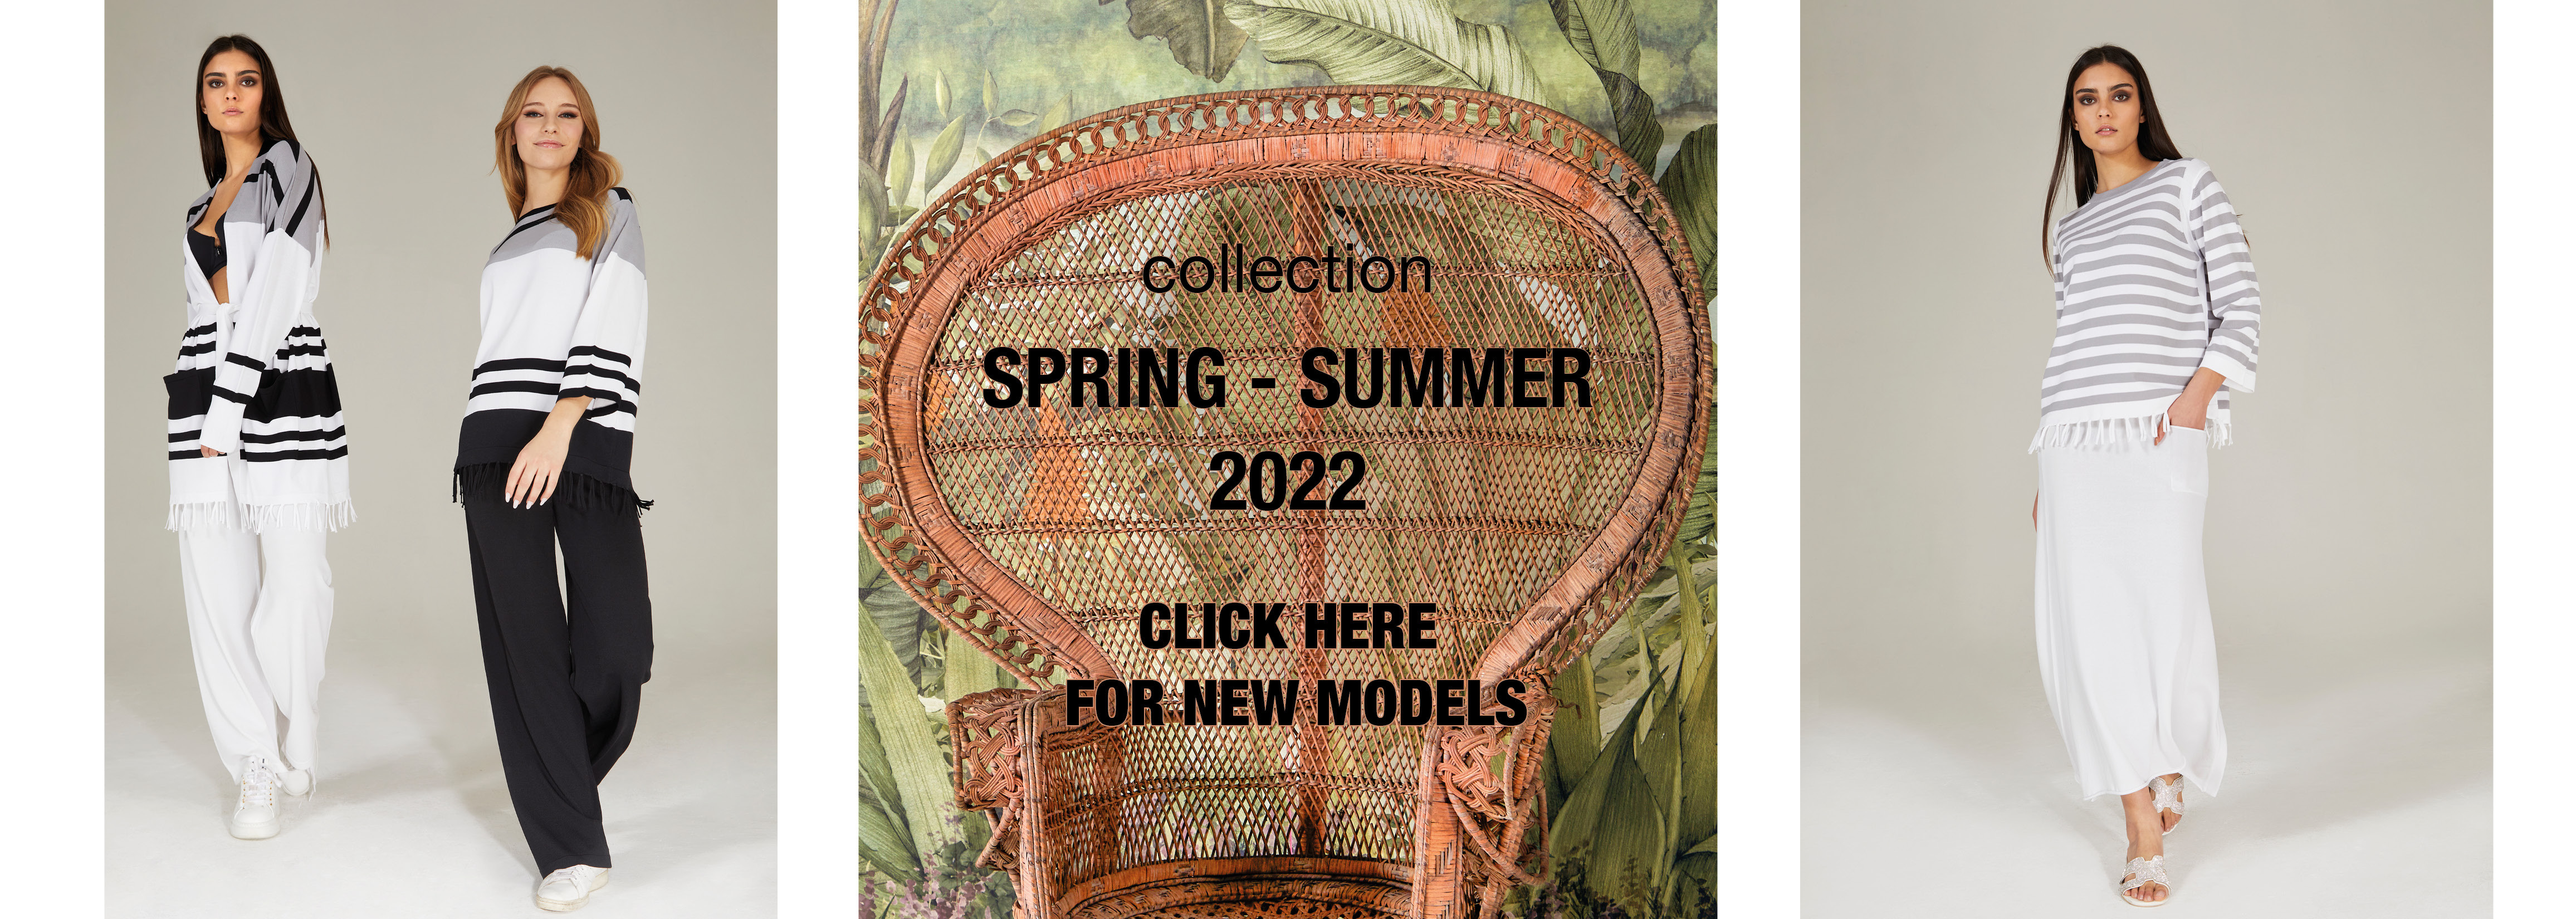 Mitika 2022 Spring Summer Collection slide 5